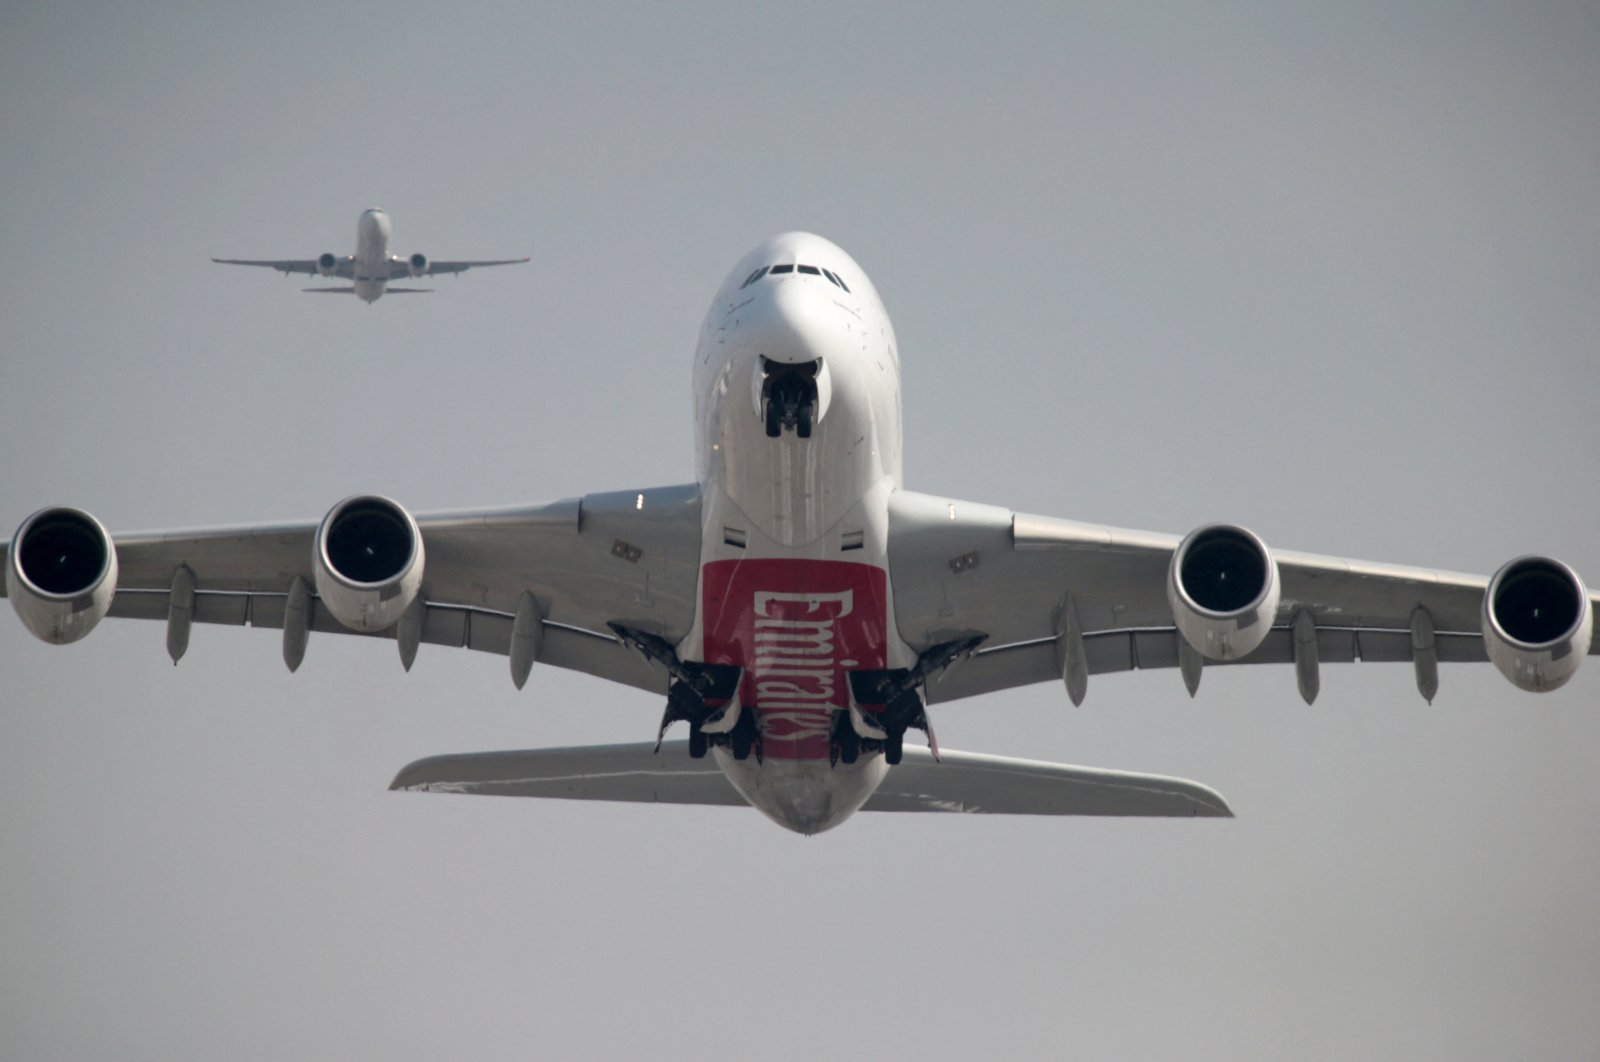 An Emirates Airline Airbus A380-800 plane takes off from Dubai International Airport in Dubai, UAE, Feb. 15, 2019. (Reuters Photo)